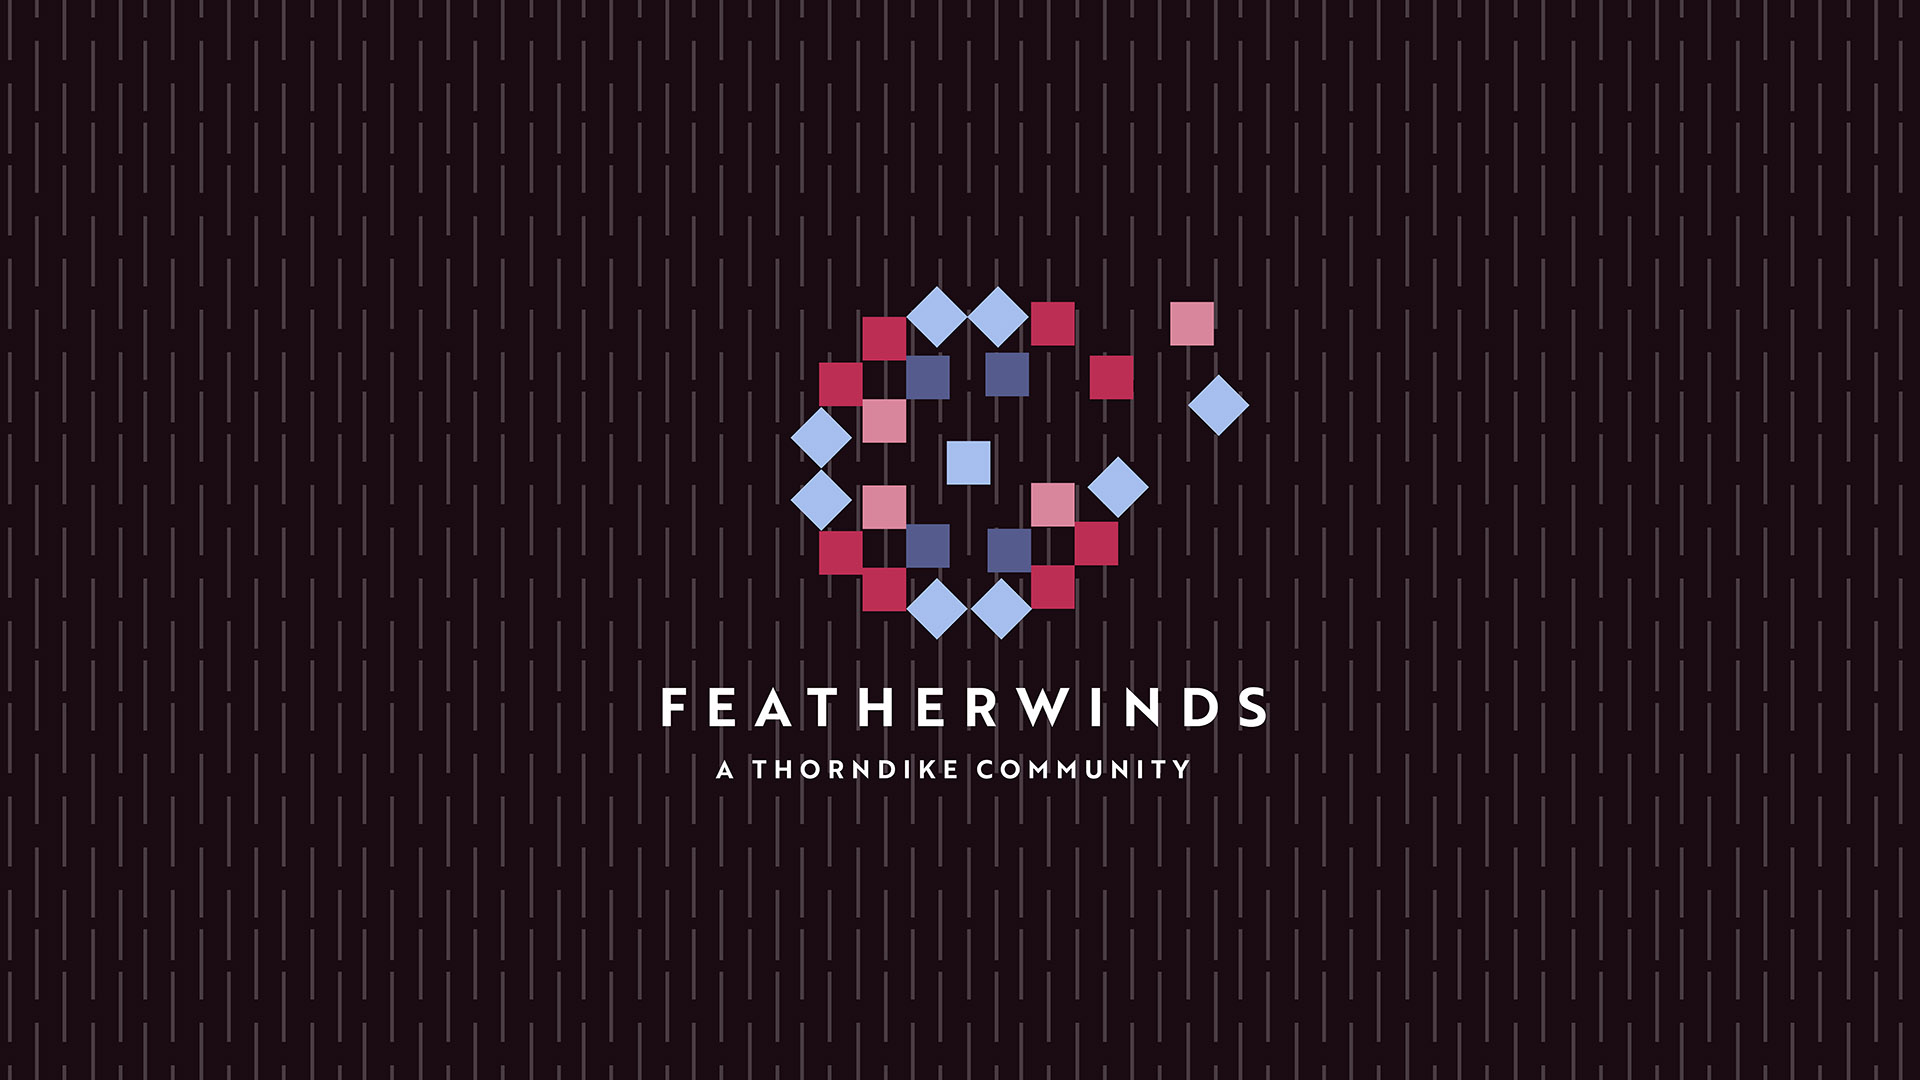 featherwinds logo on dark background